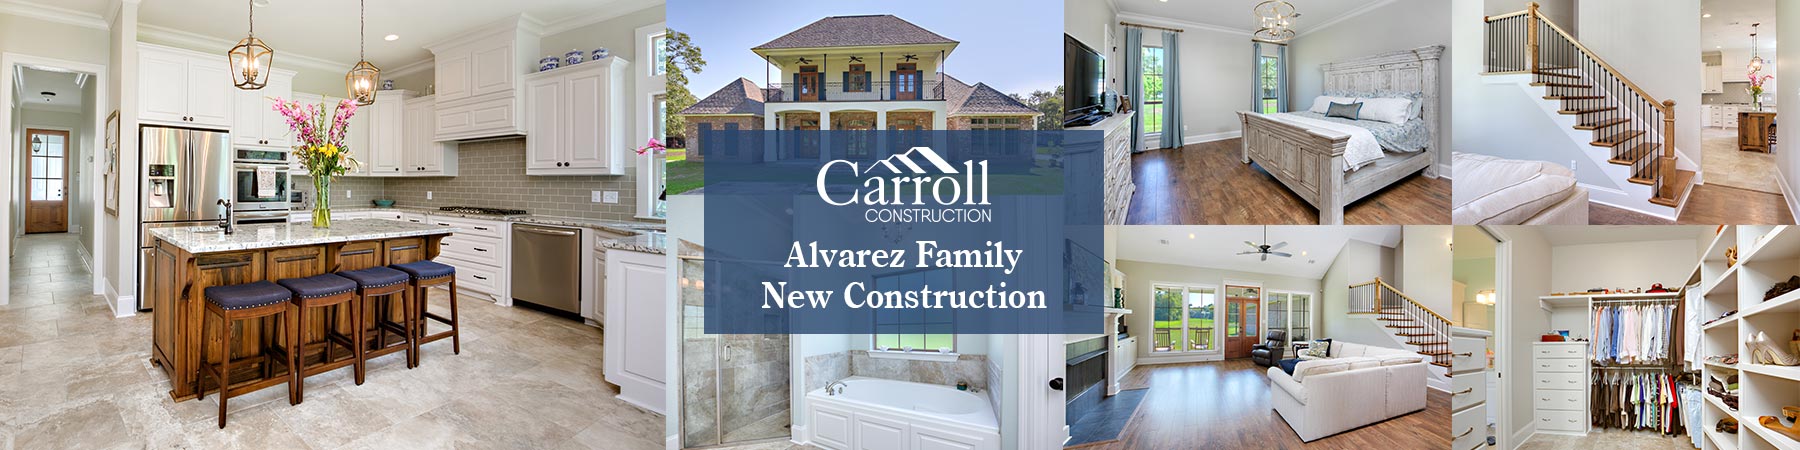 Alvarez Family New Construction Project